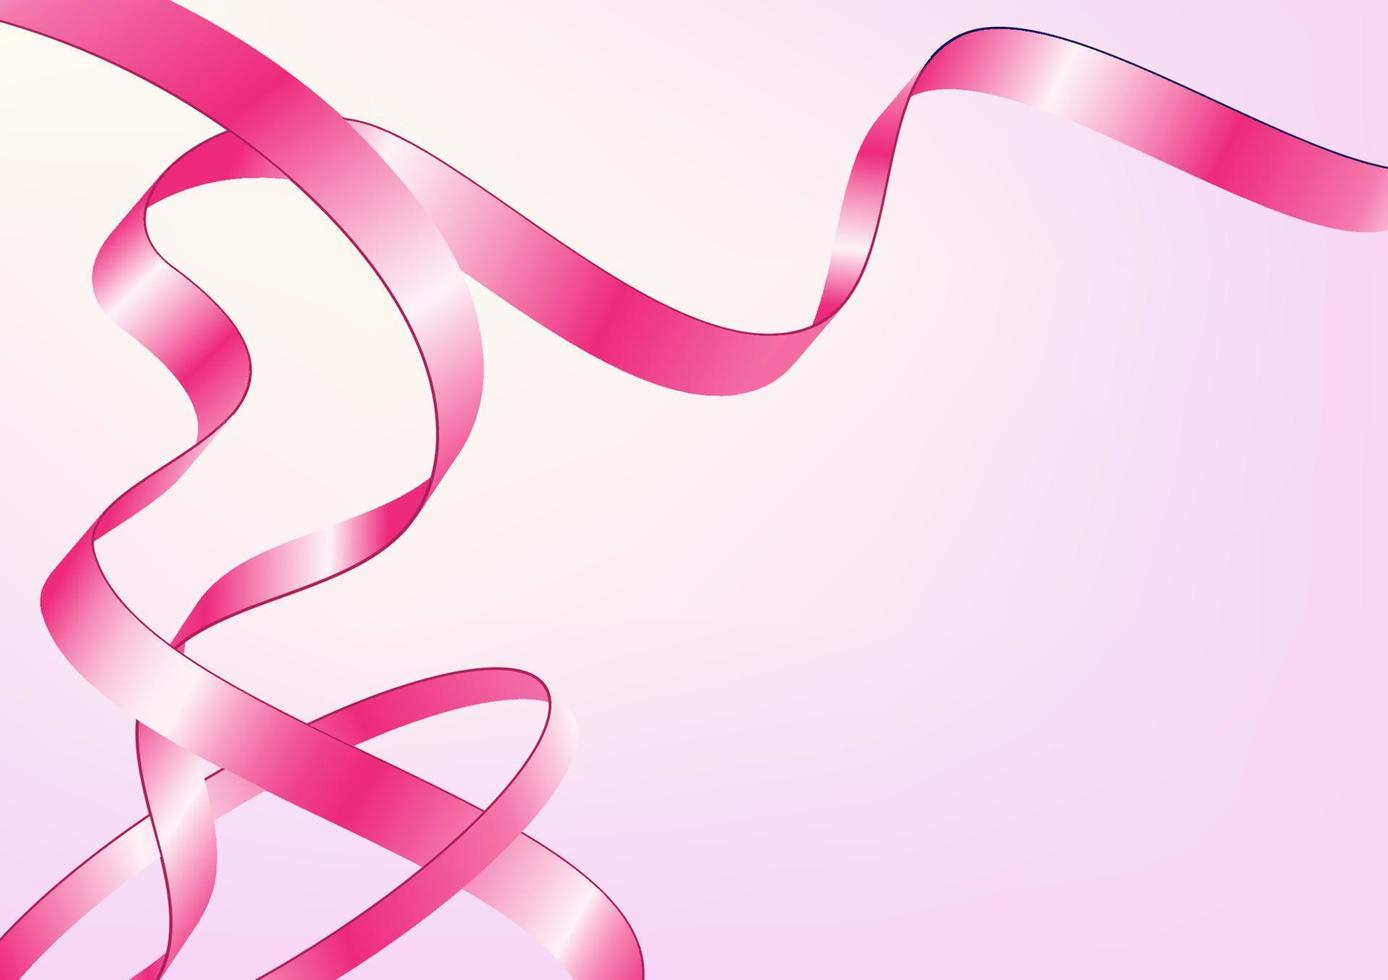 abstracte roze linten golvende vector op lichte roze achtergrond met kleurovergang